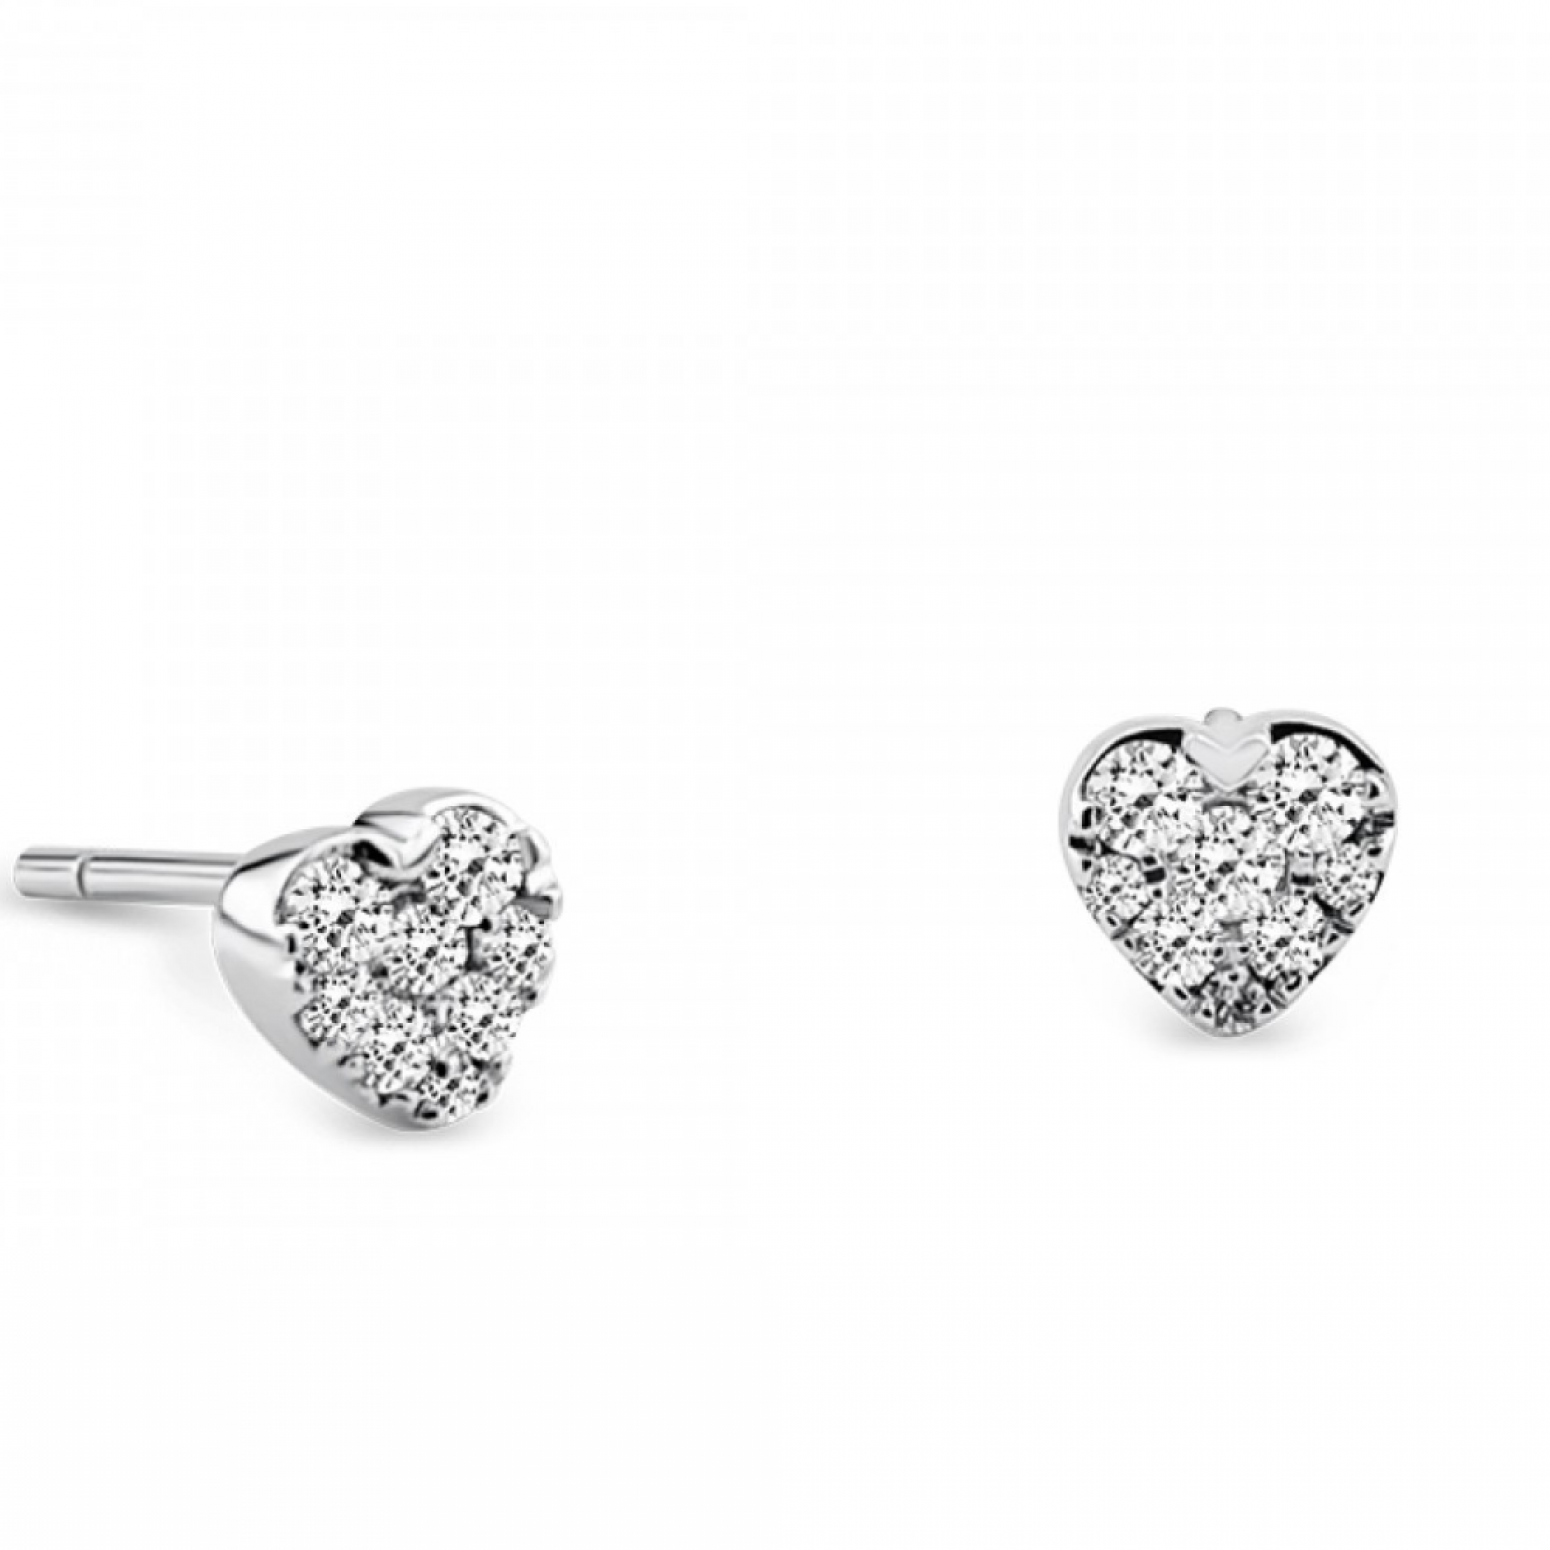 Multistone earrings hearts 18K white gold with diamonds 0.45ct, VS1, F from IGL sk2408 EARRINGS Κοσμηματα - chrilia.gr